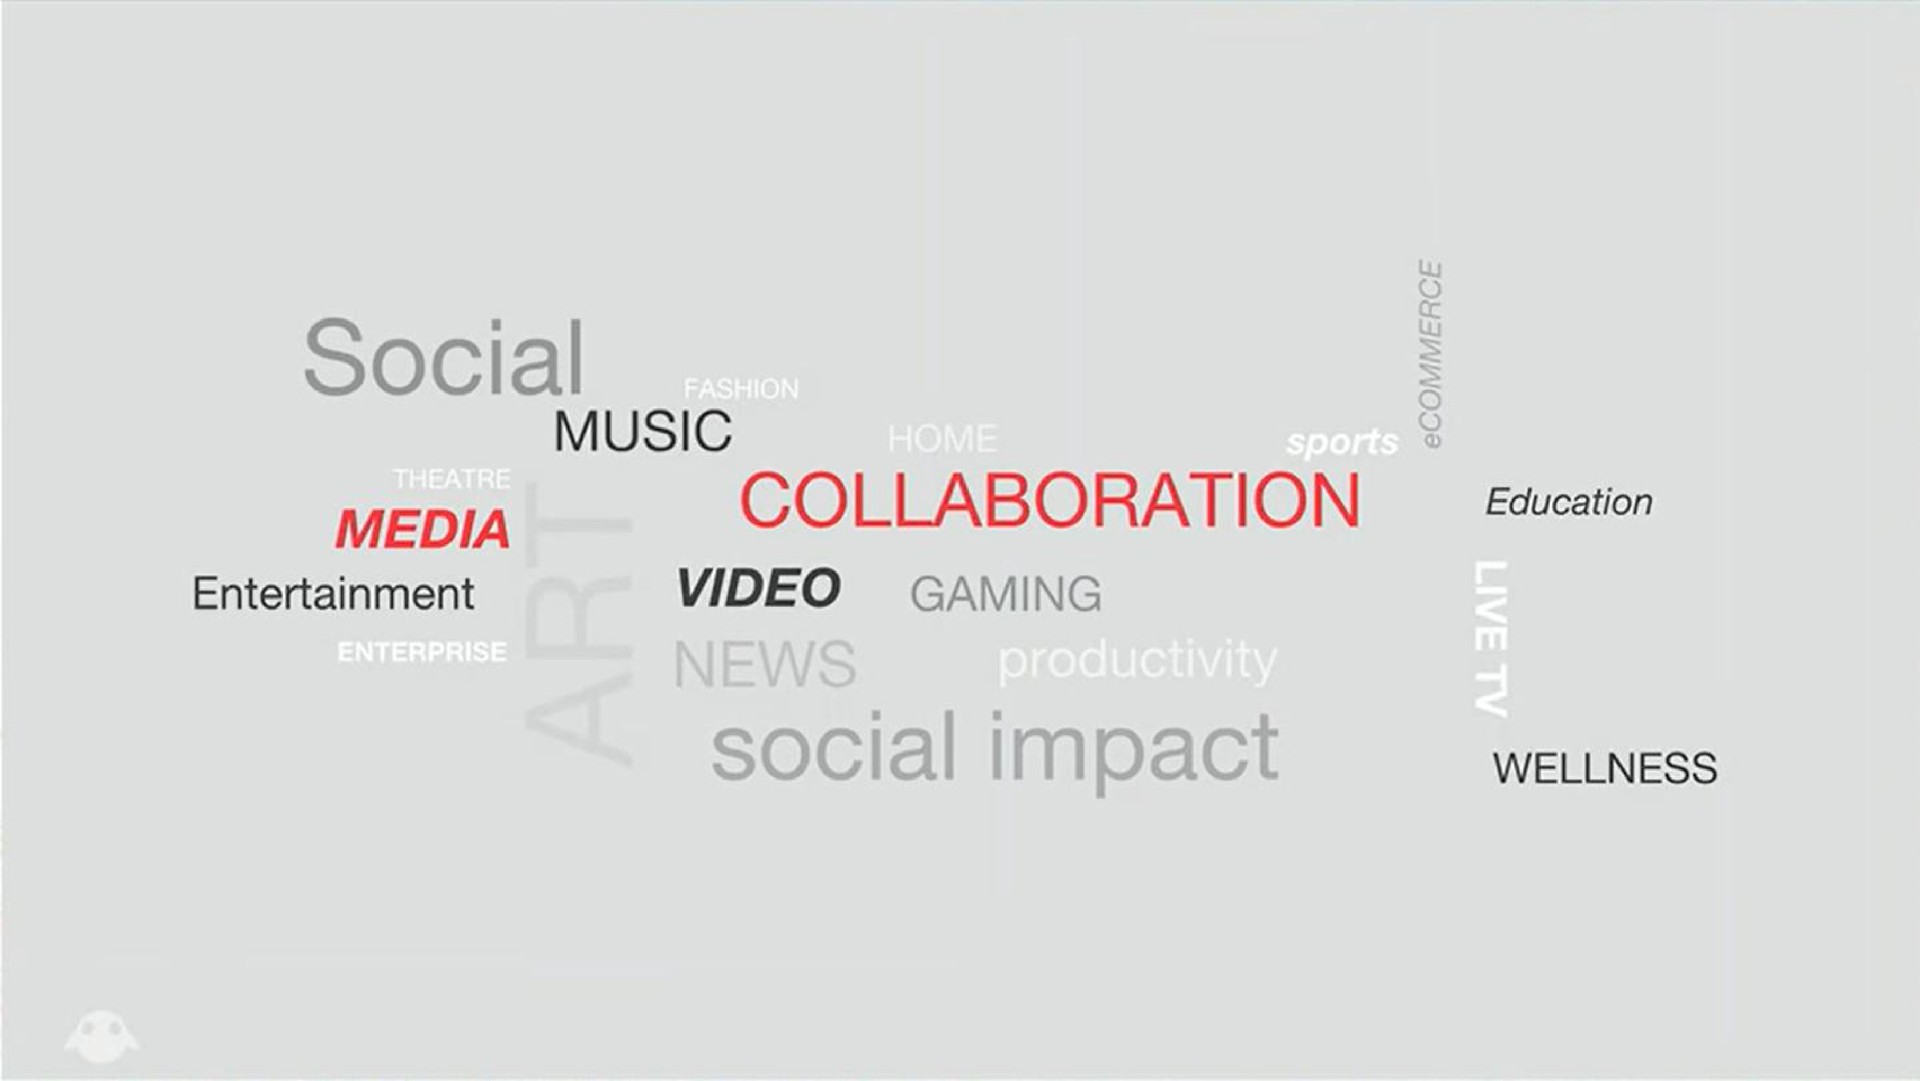 social ree entertainment collaboration video gaming social impact wellness | Magic Leap